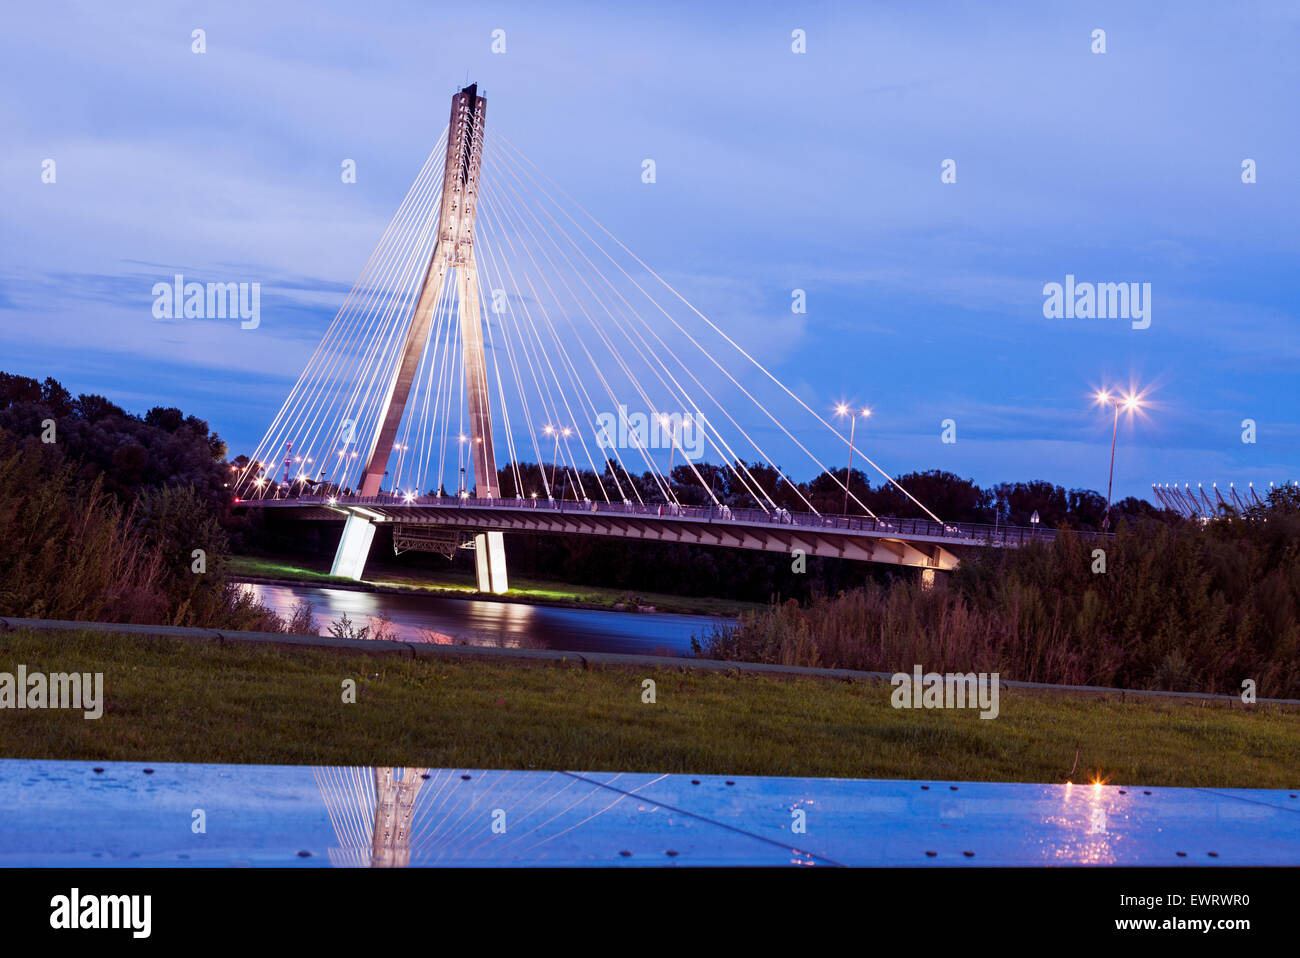 Swietokrzyski Bridge evening time - Warsaw, Poland, Europe Stock Photo